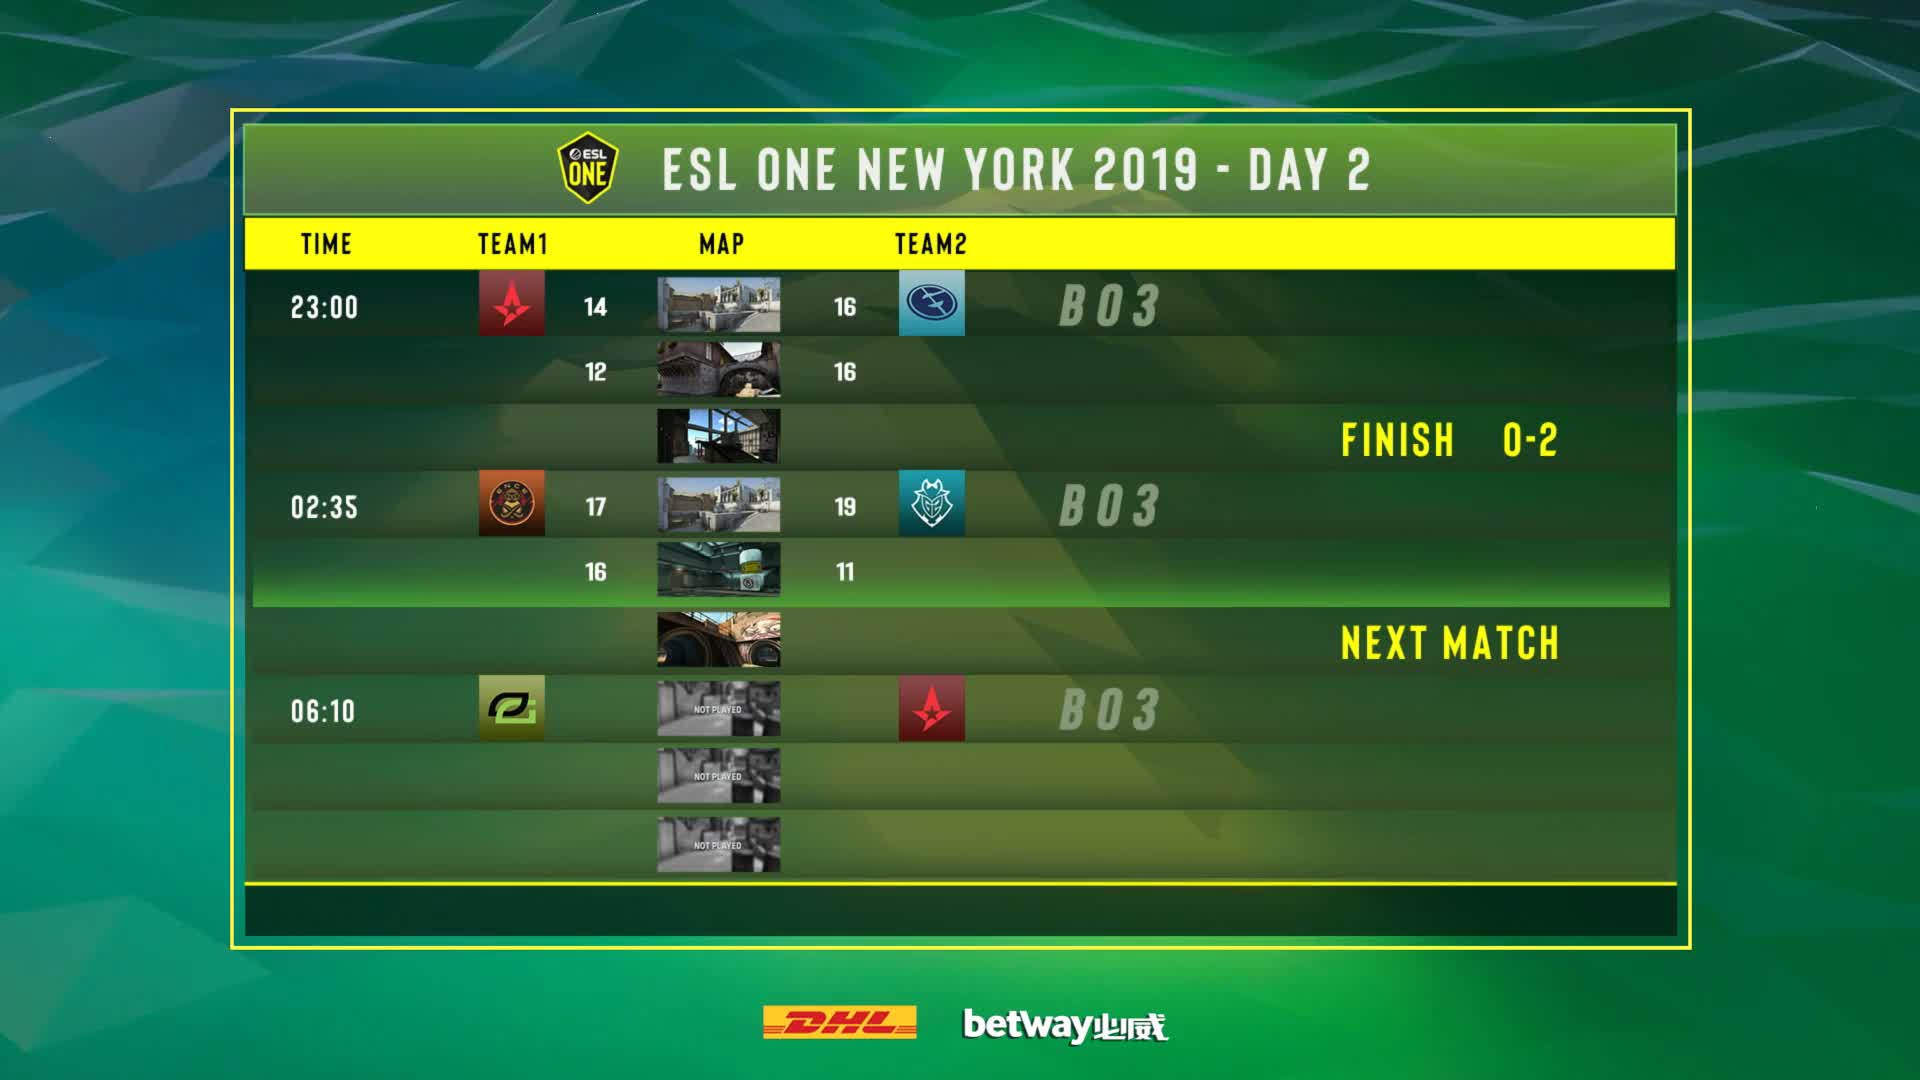 ENCE vs G2 ESL ONE纽约站